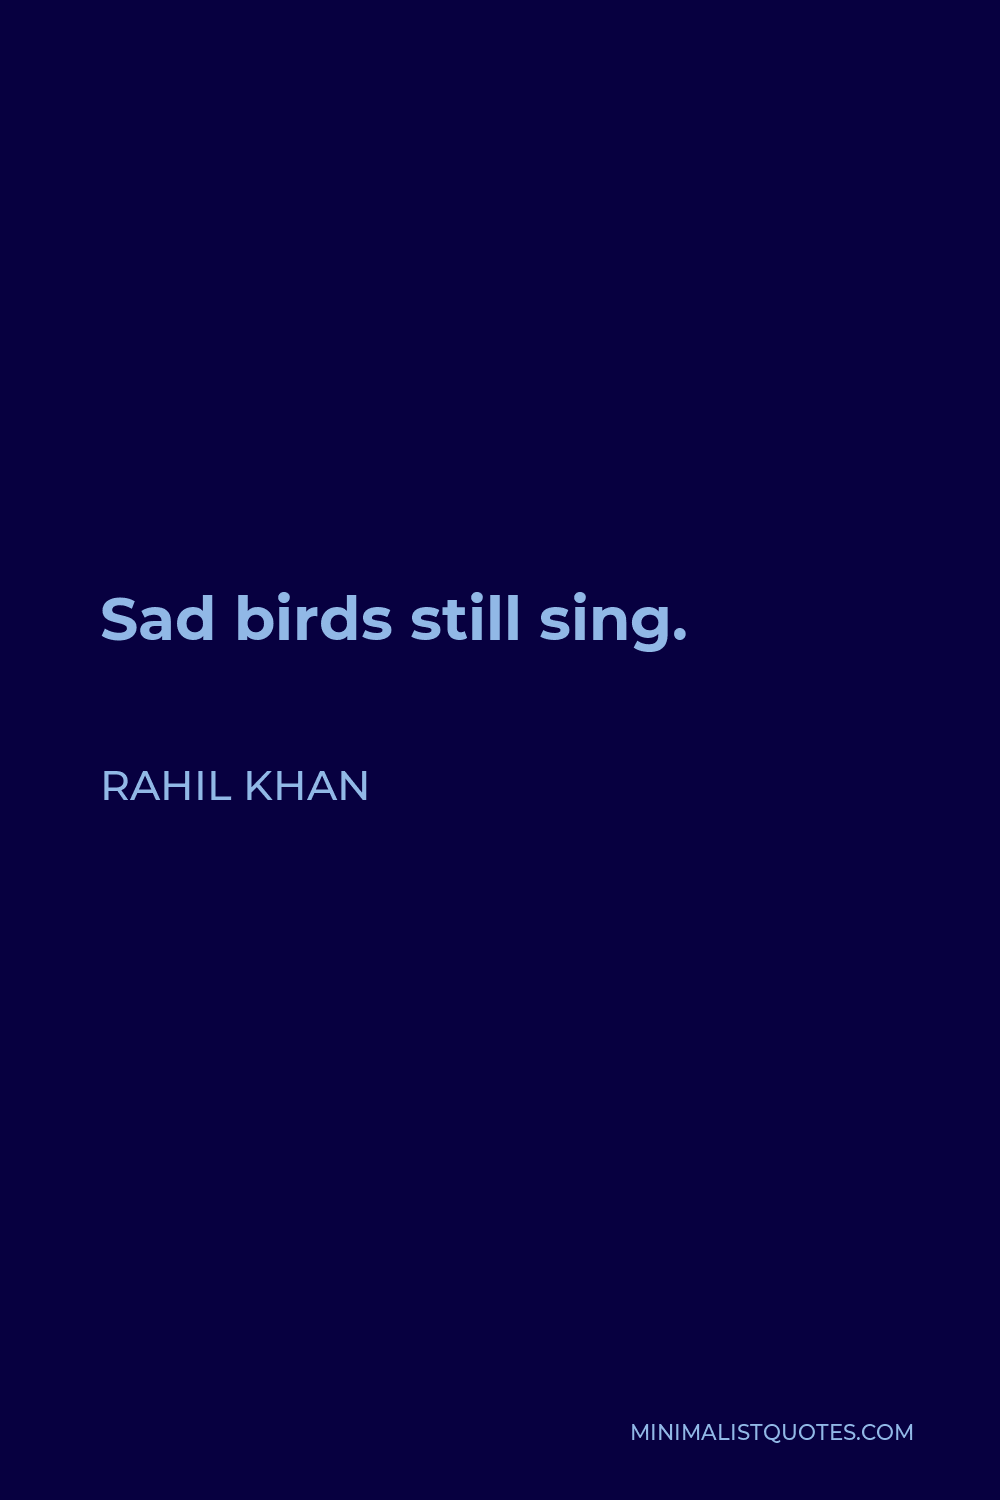 Rahil Khan Quote - Sad birds still sing.